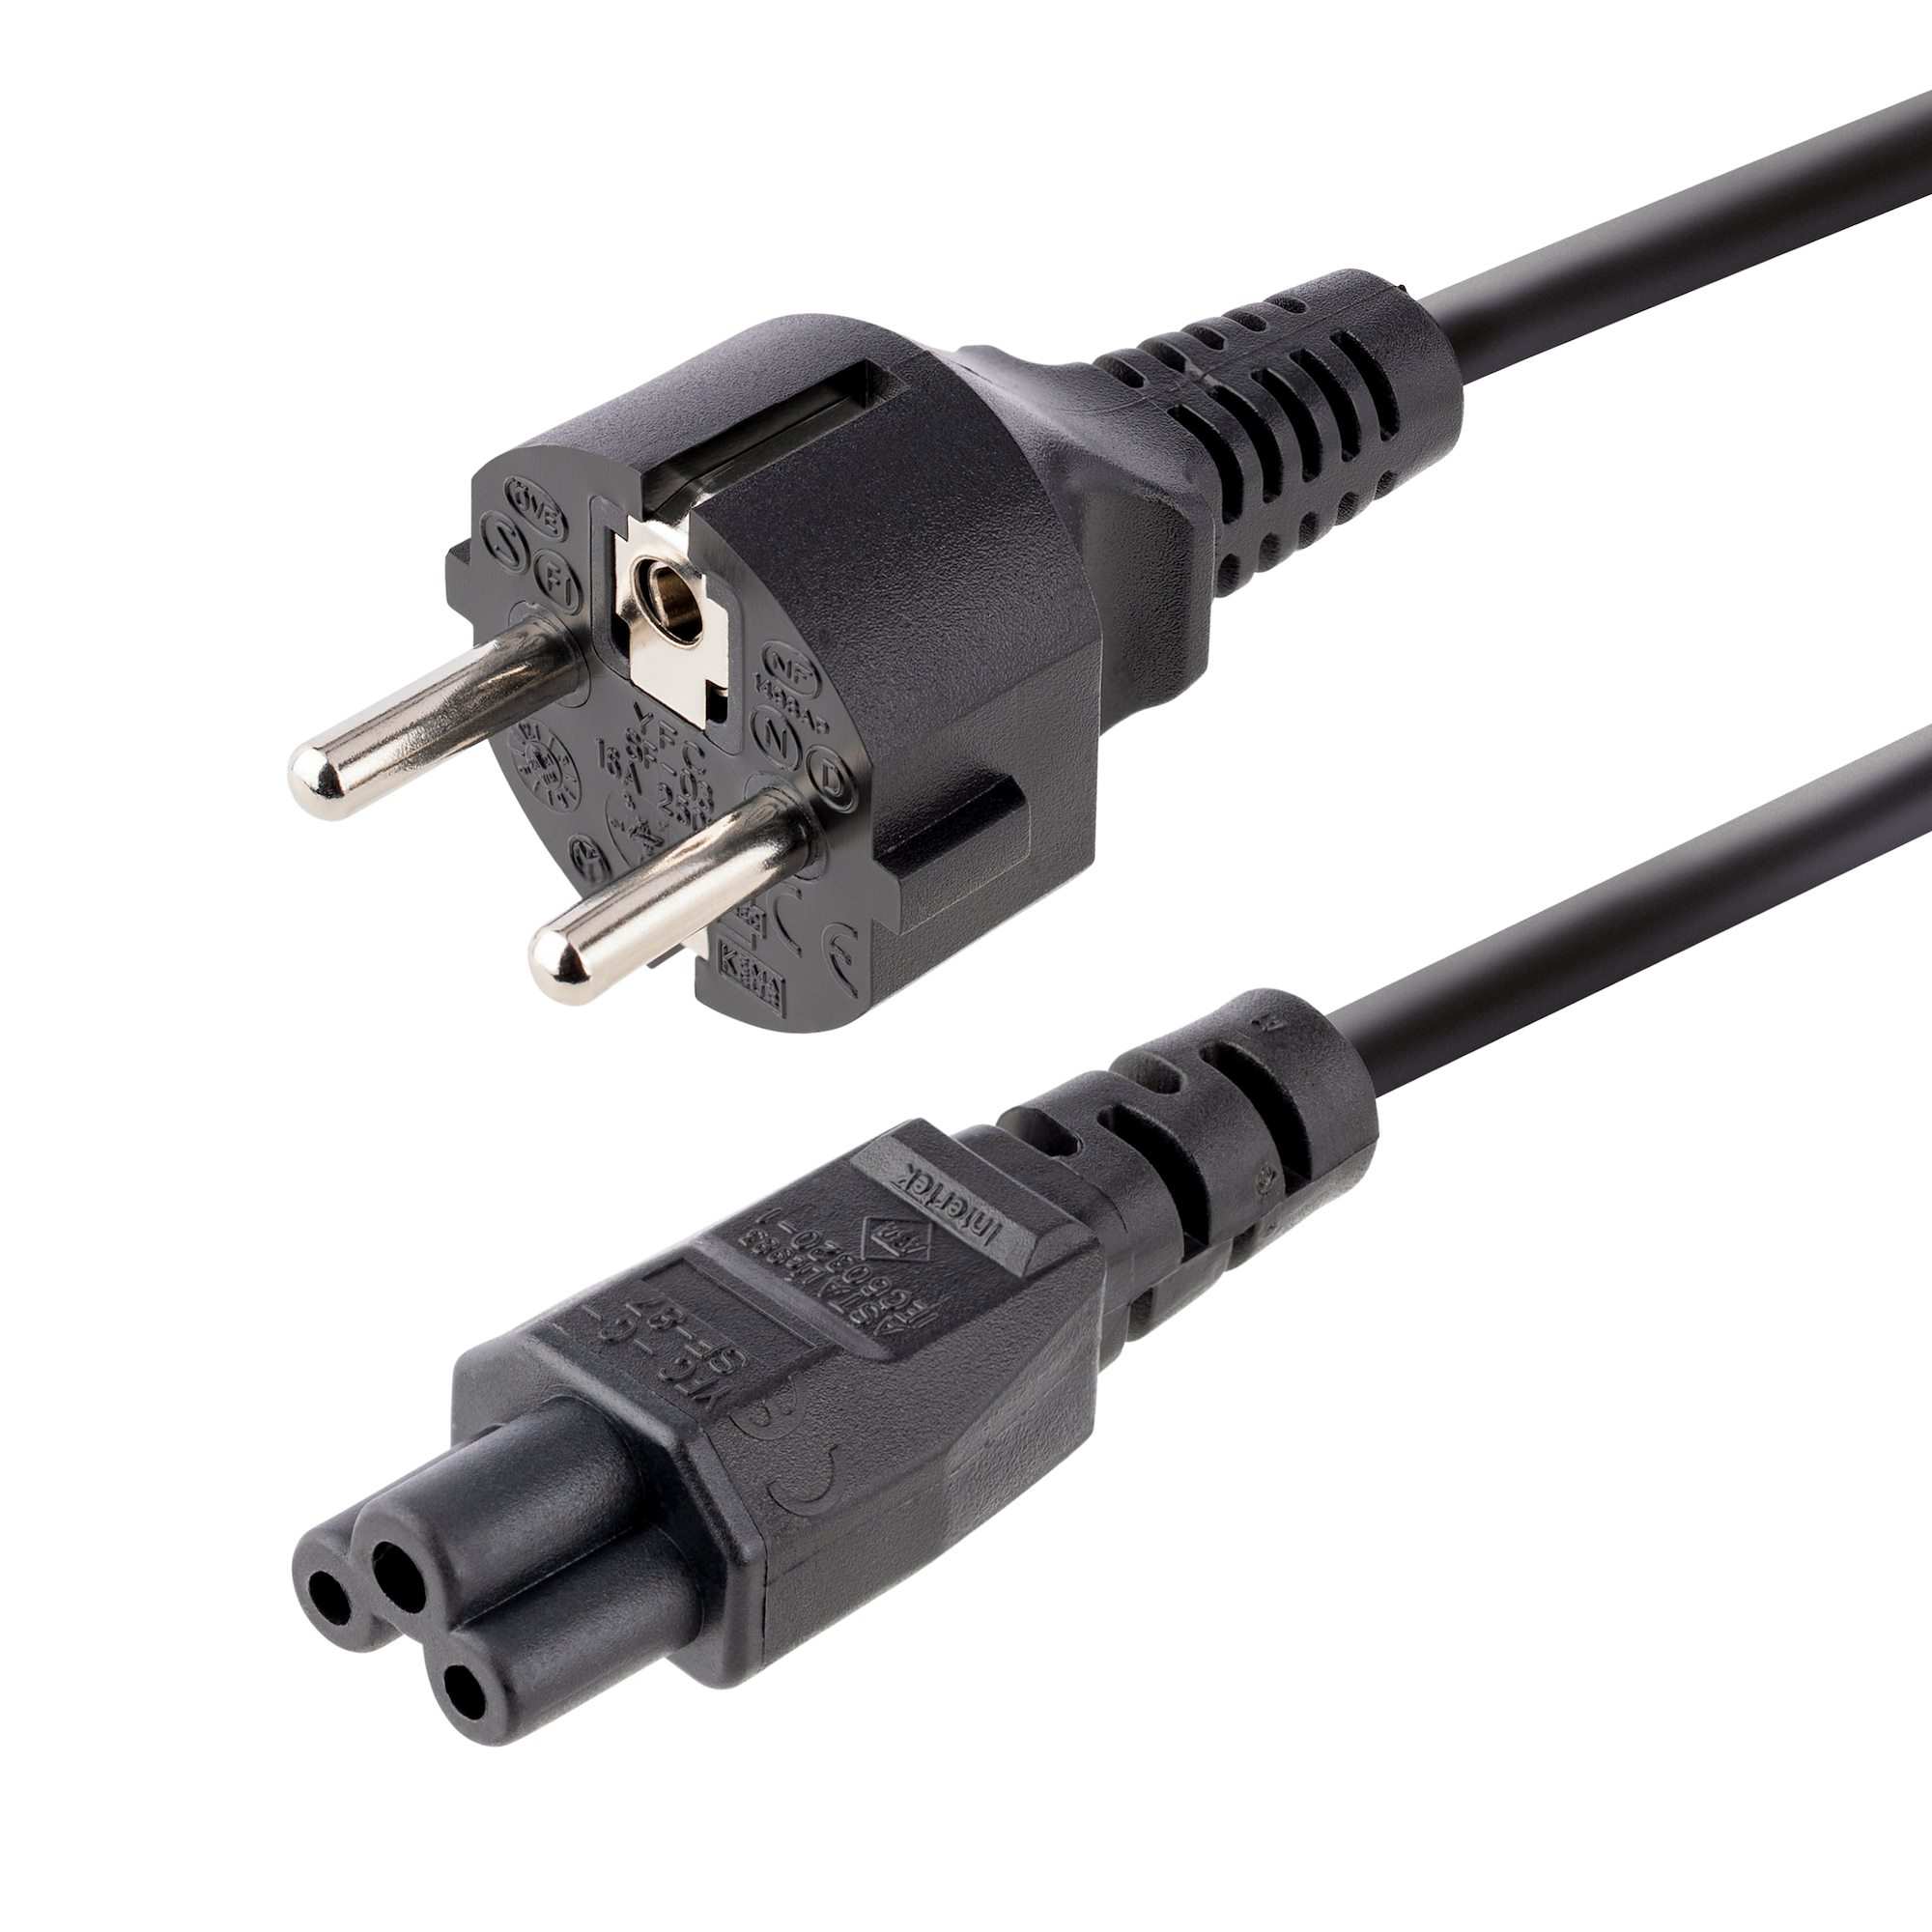 Photos - Cable (video, audio, USB) Startech.com 3m  Laptop Power Cord, EU Schuko to C5, 2.5A 250V, 753E (10ft)